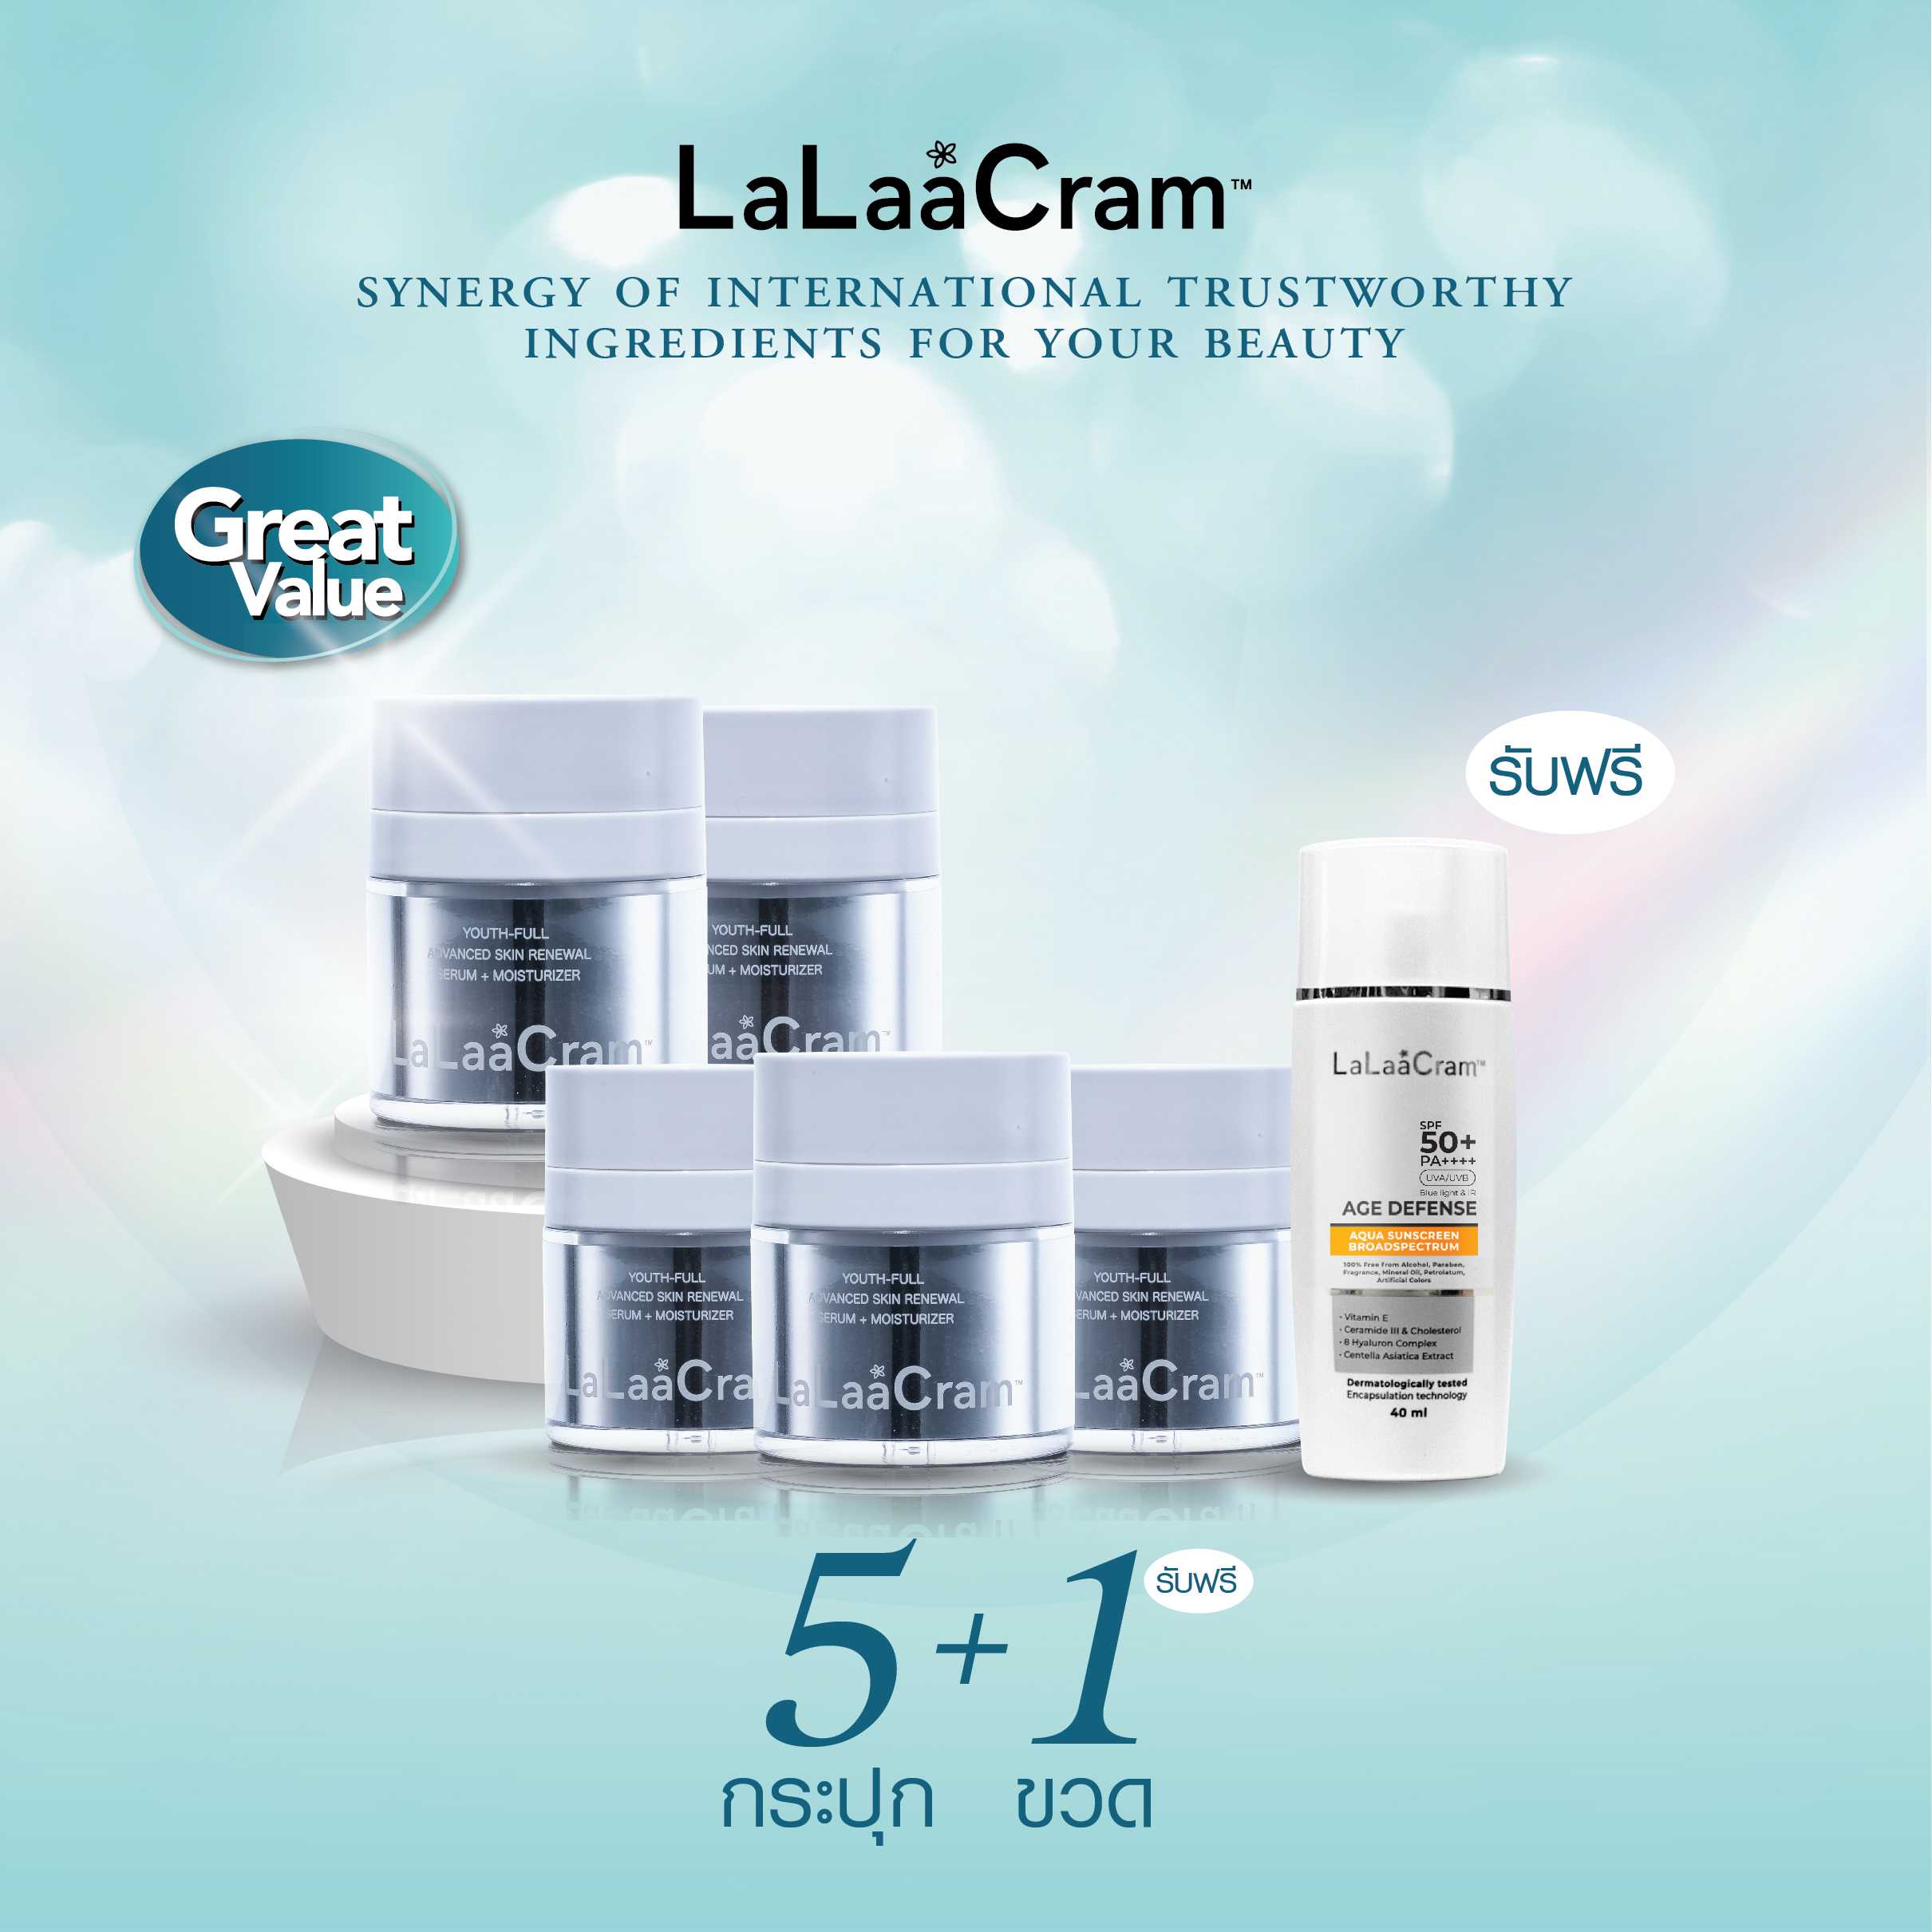 LaLaaCram Youth-Full Advanced Skin Renewal Serum + Moisturizer x 5 + Free Anti-Aging Sunscreen x 1